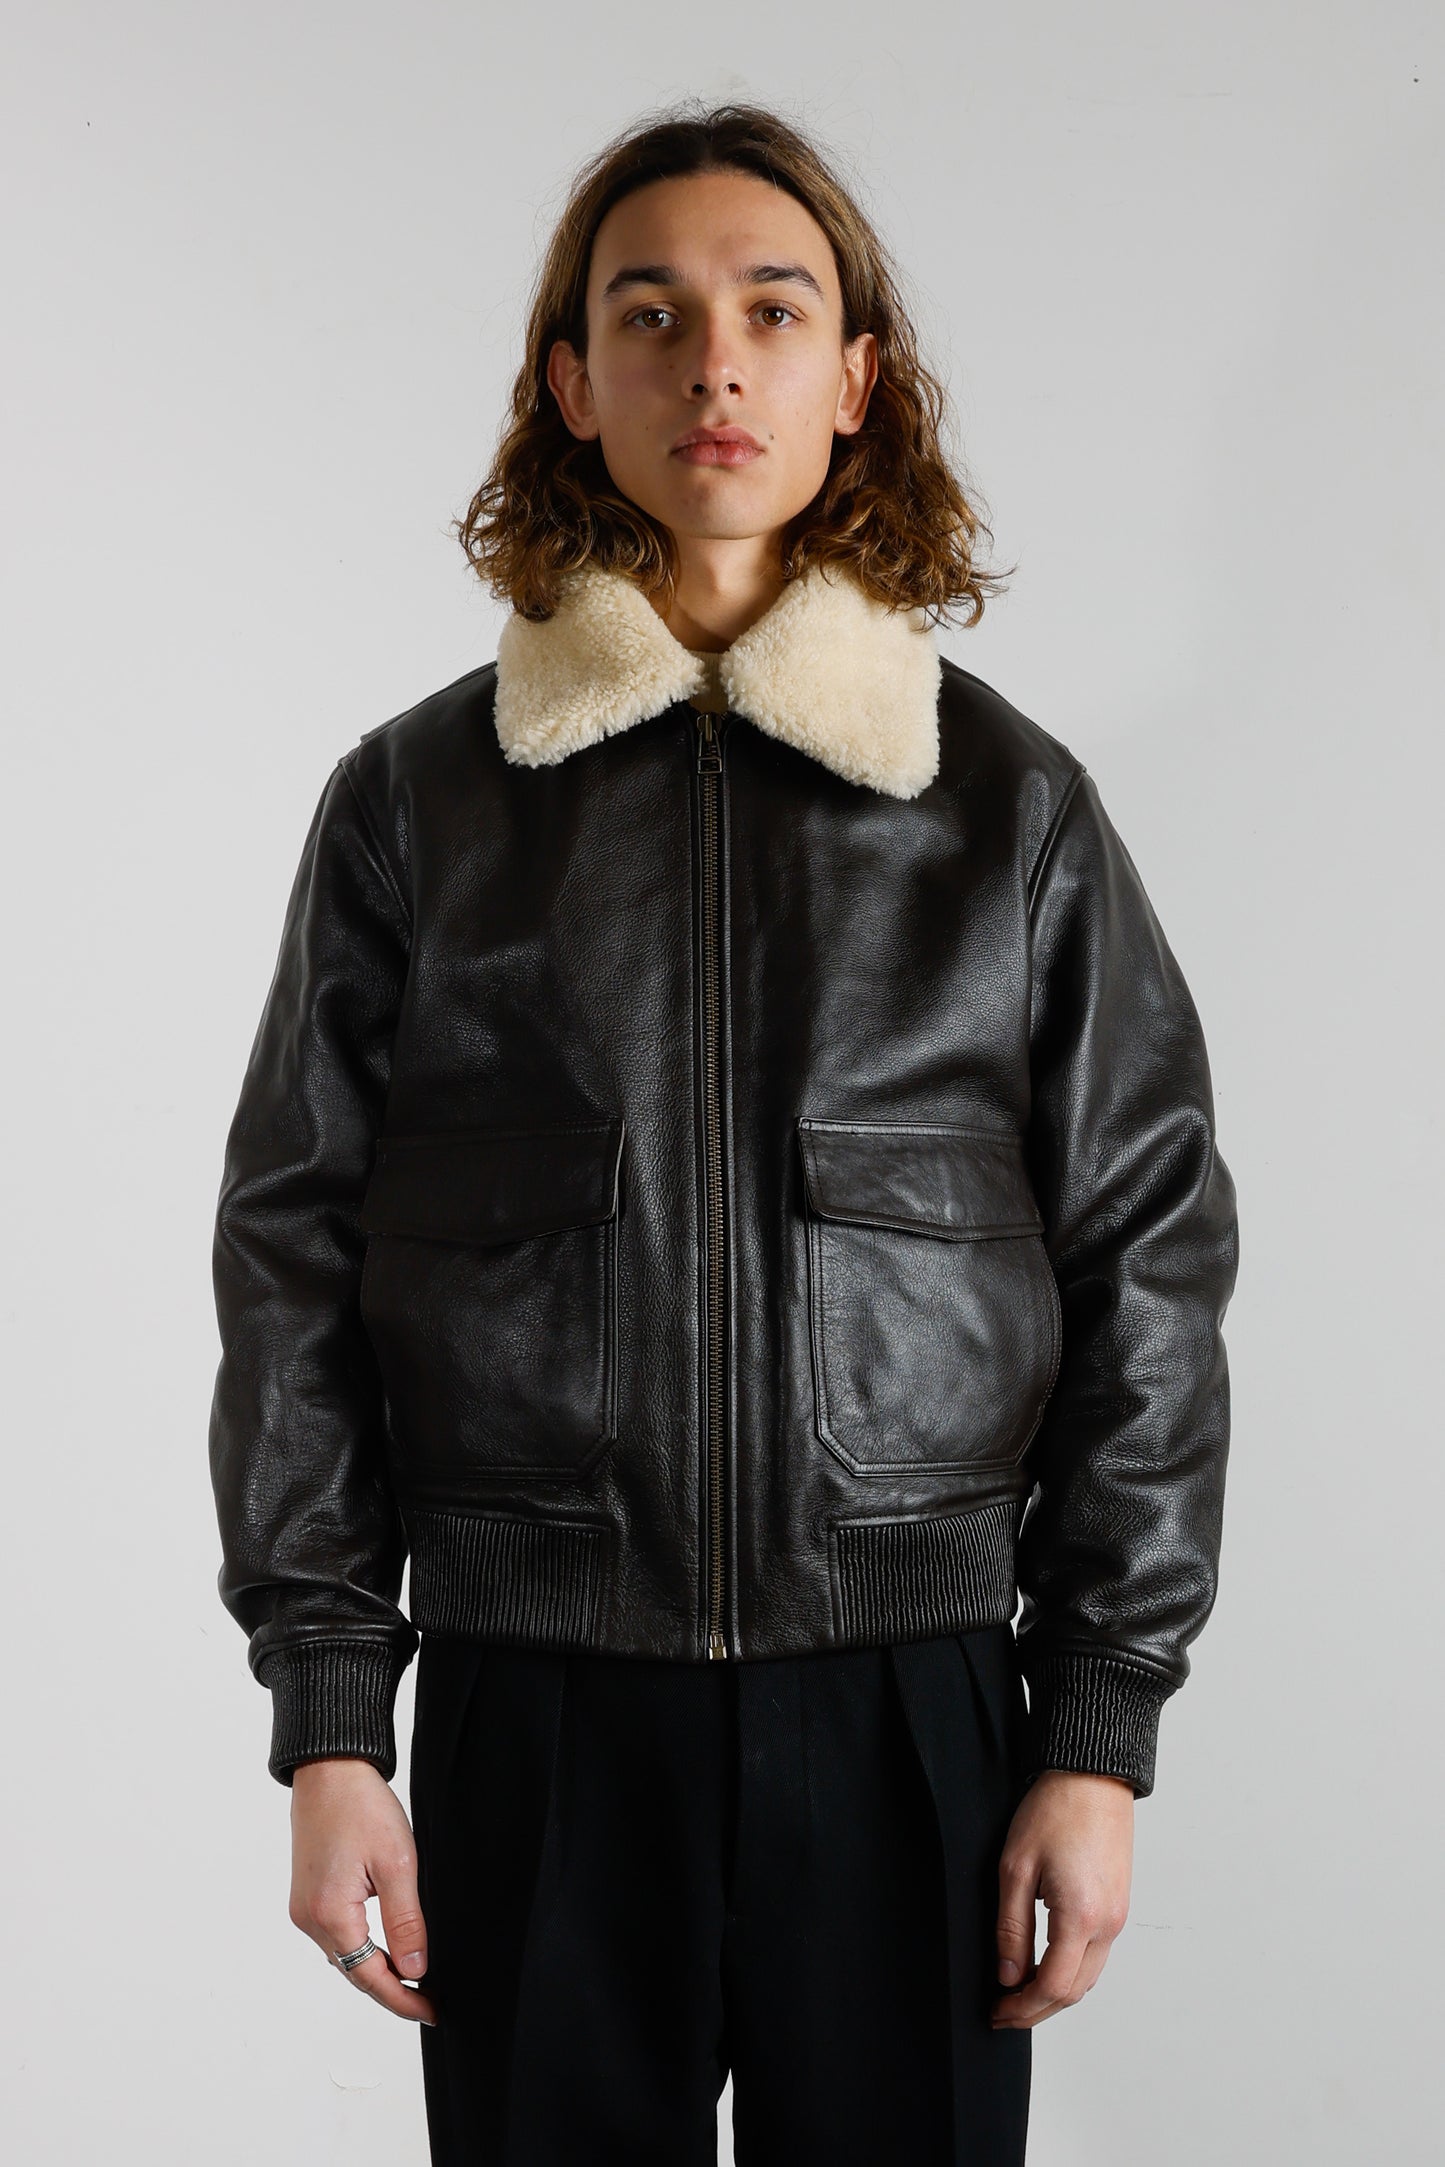 Flight Jacket - Brown Leather